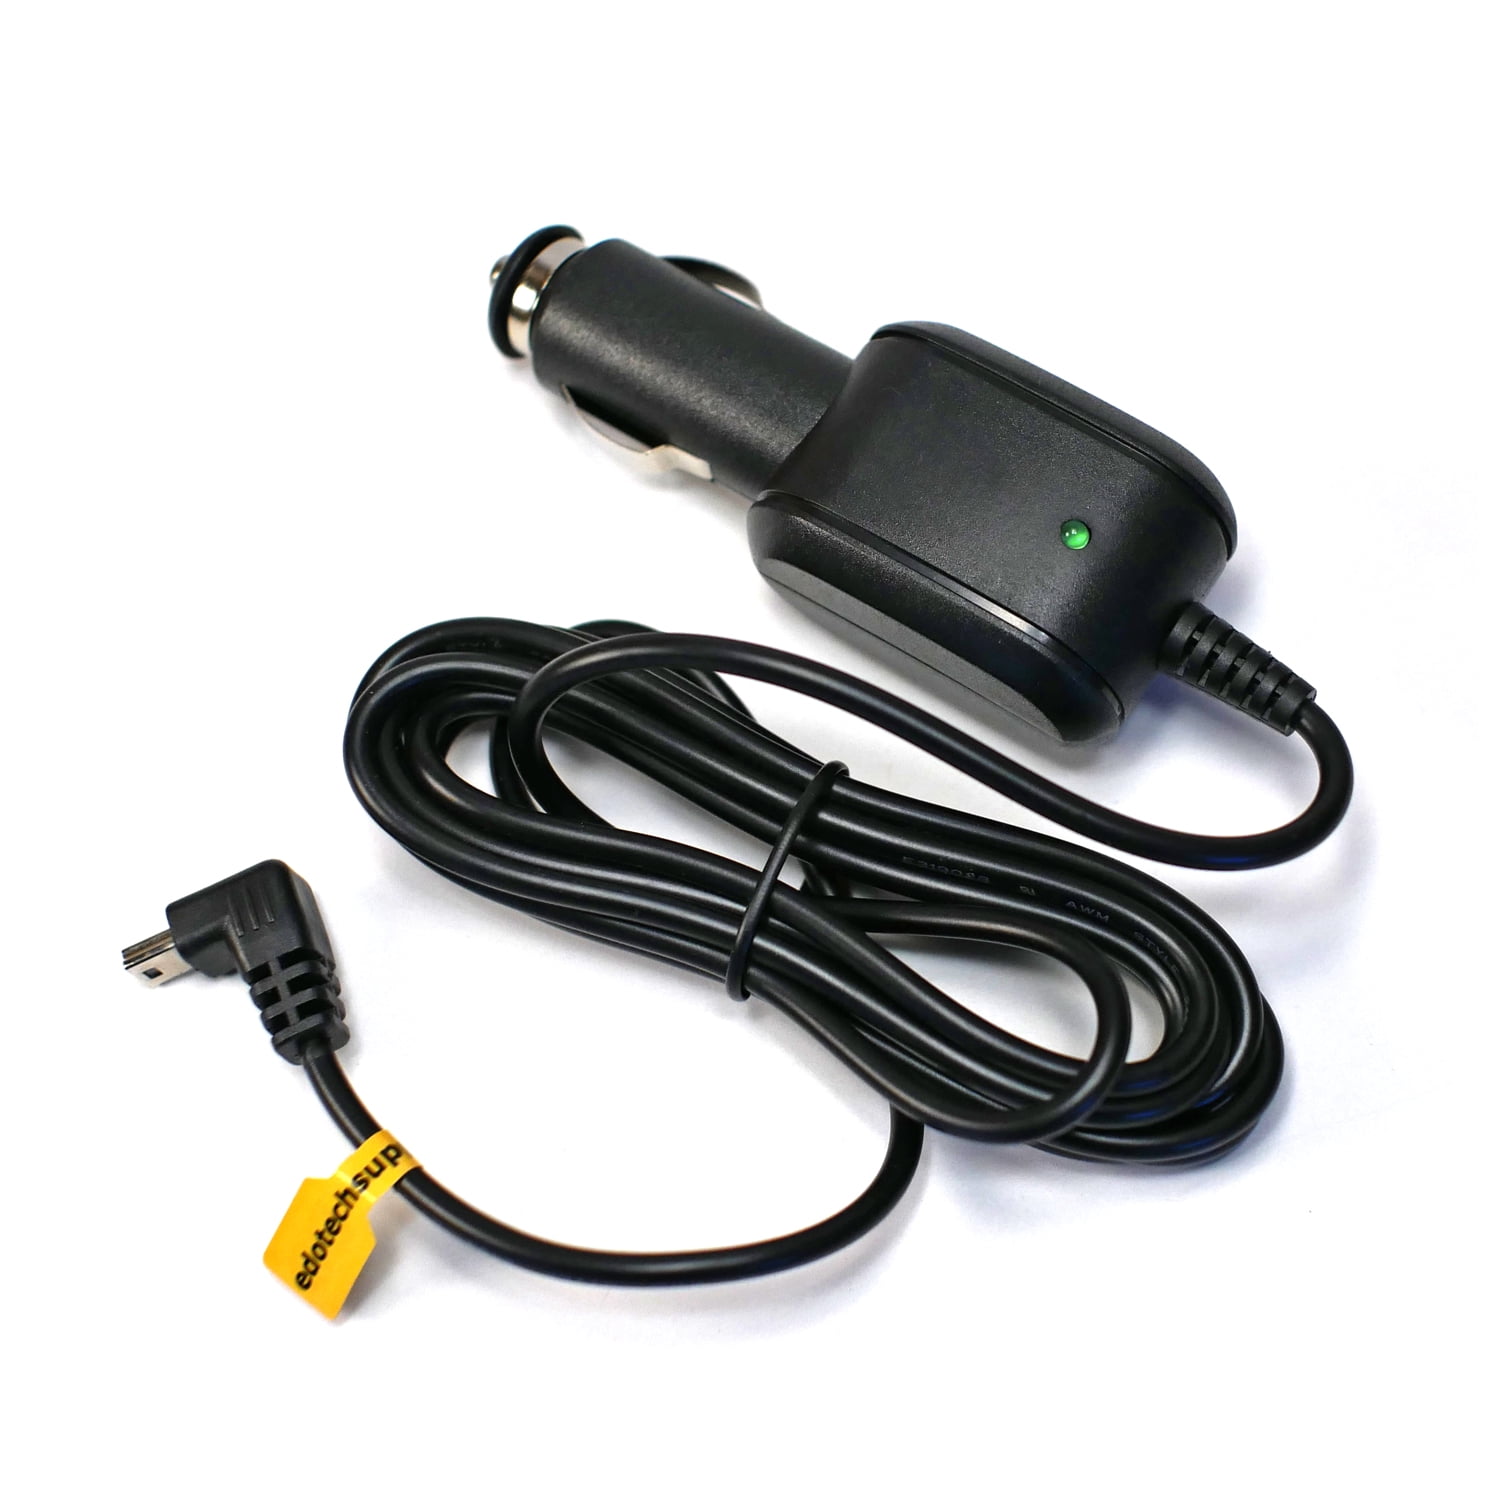 1 USB Port Car Charger for GARMIN nuvi 40 40LM navigation GPS receiver 